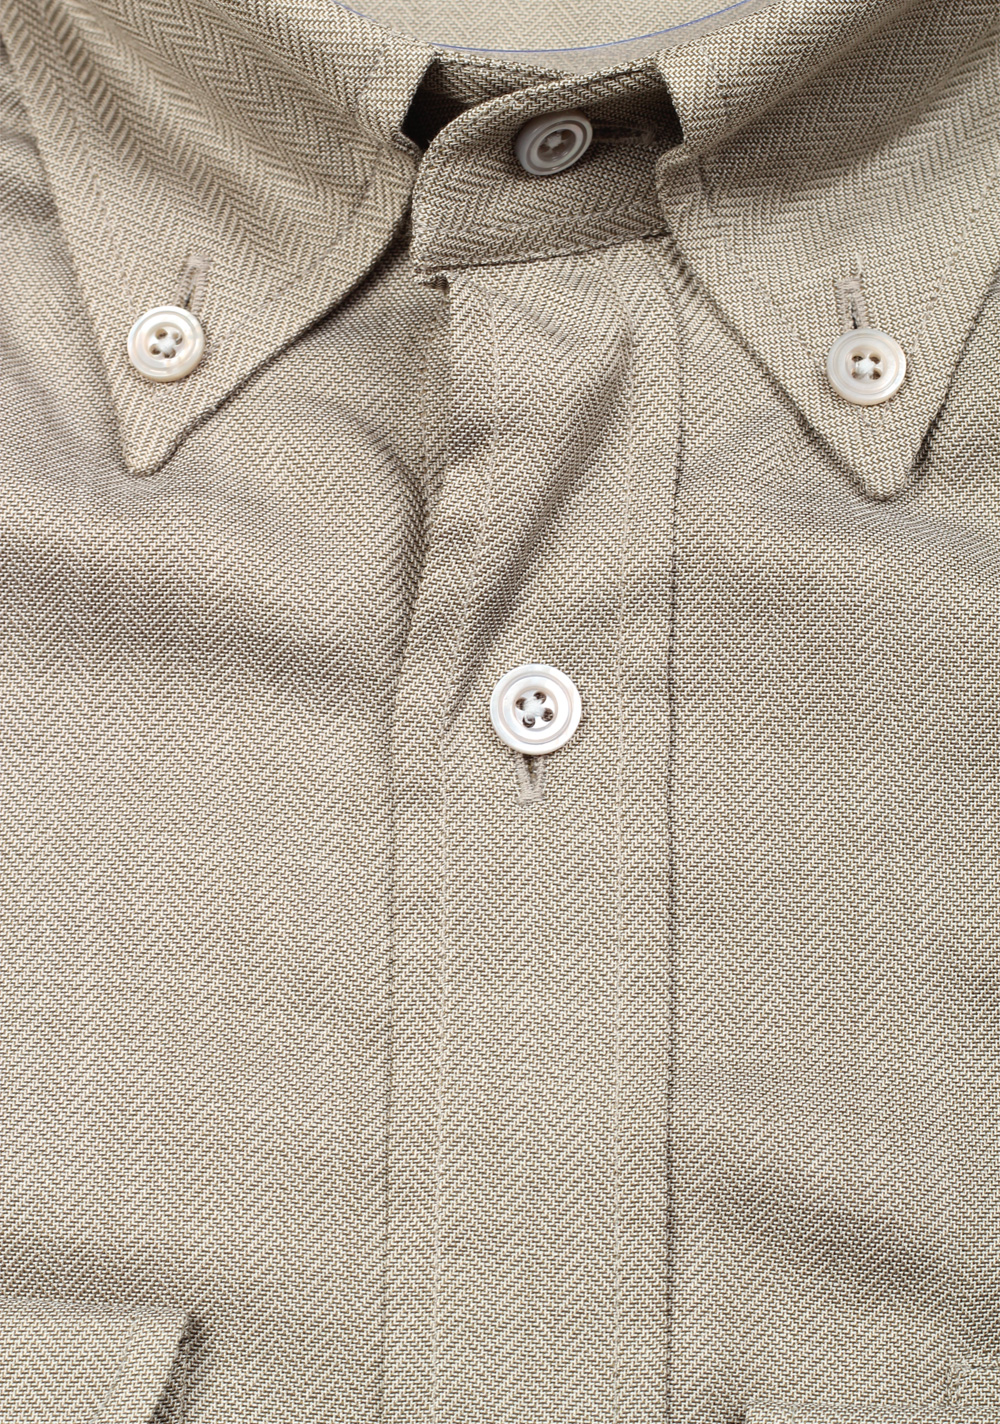 TOM FORD Solid Beige Shirt Size 40 / 15,75 U.S. | Costume Limité